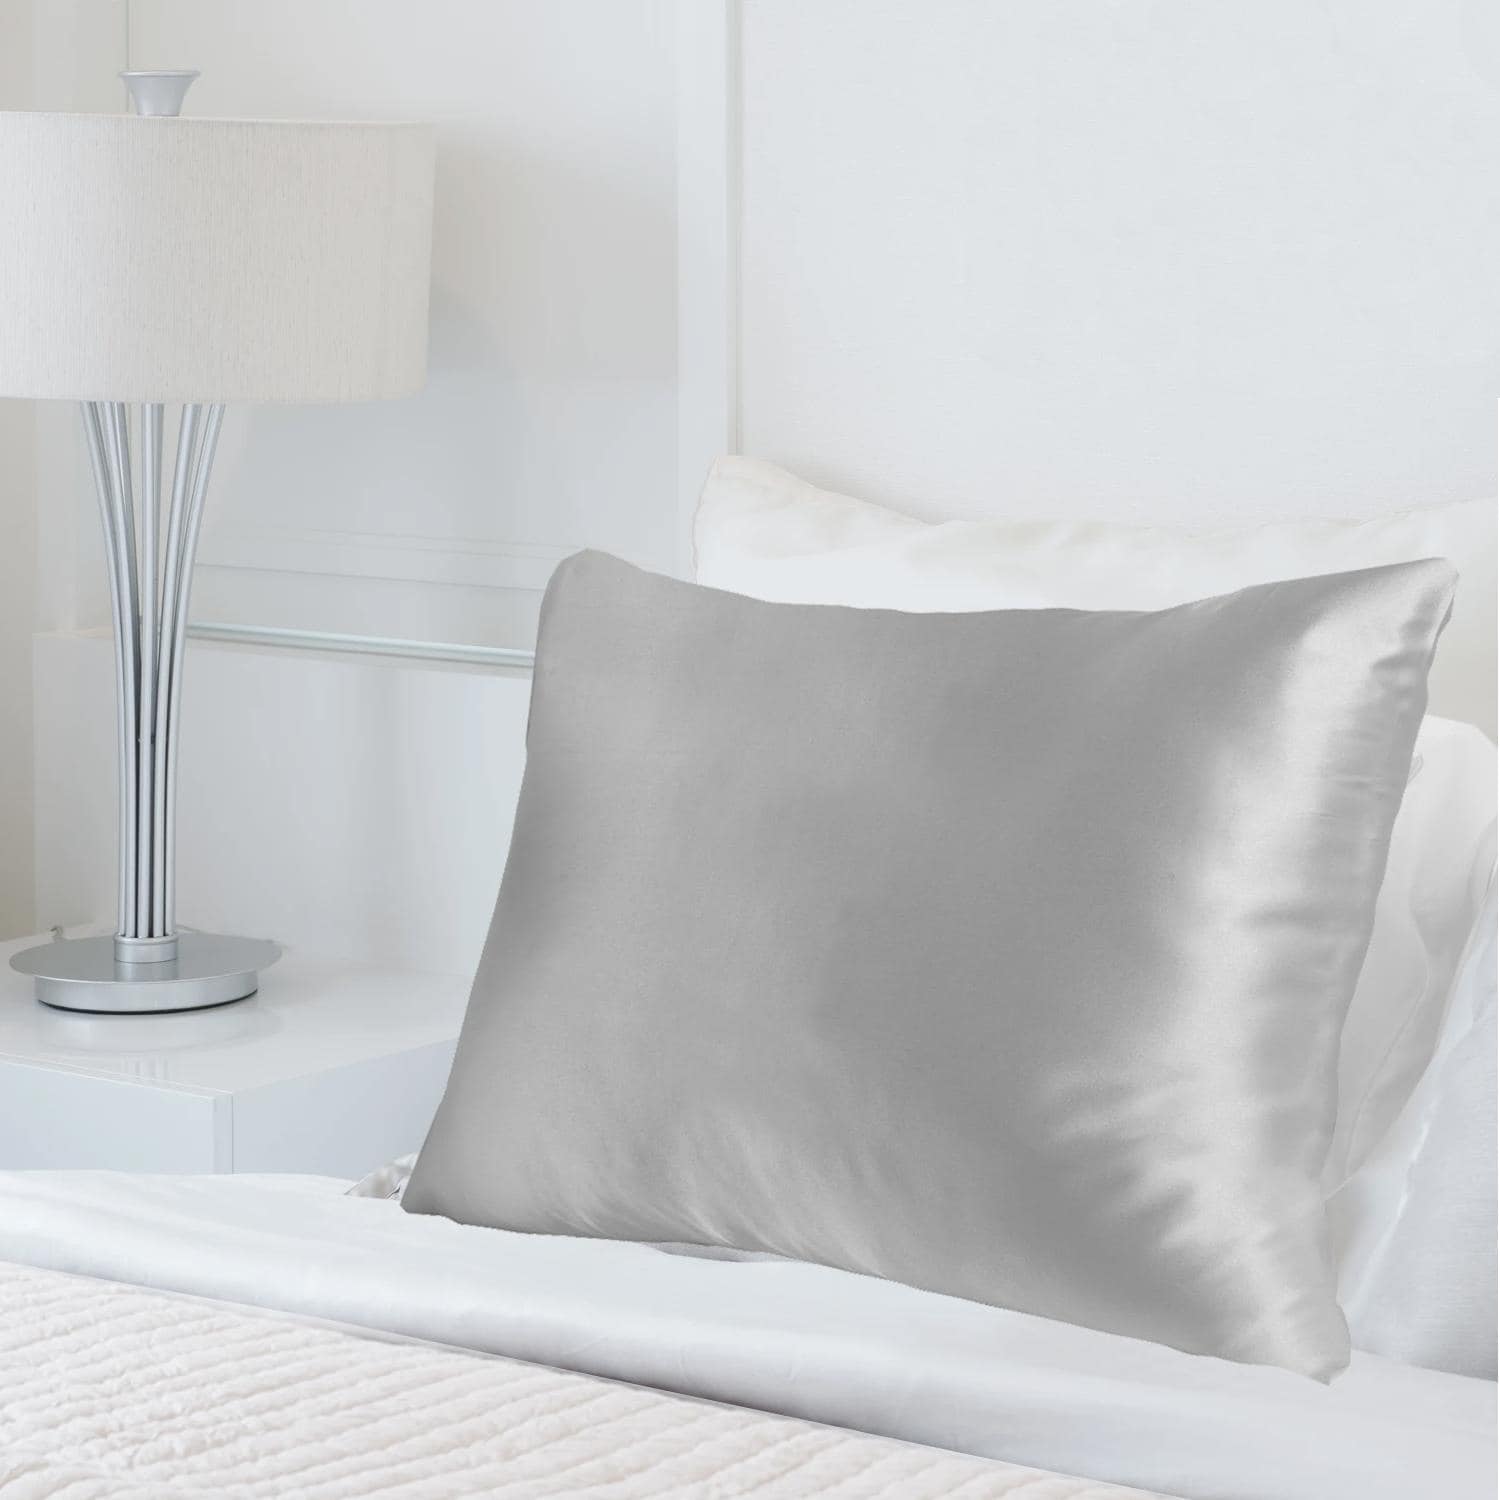 Square Silk Pillowcase